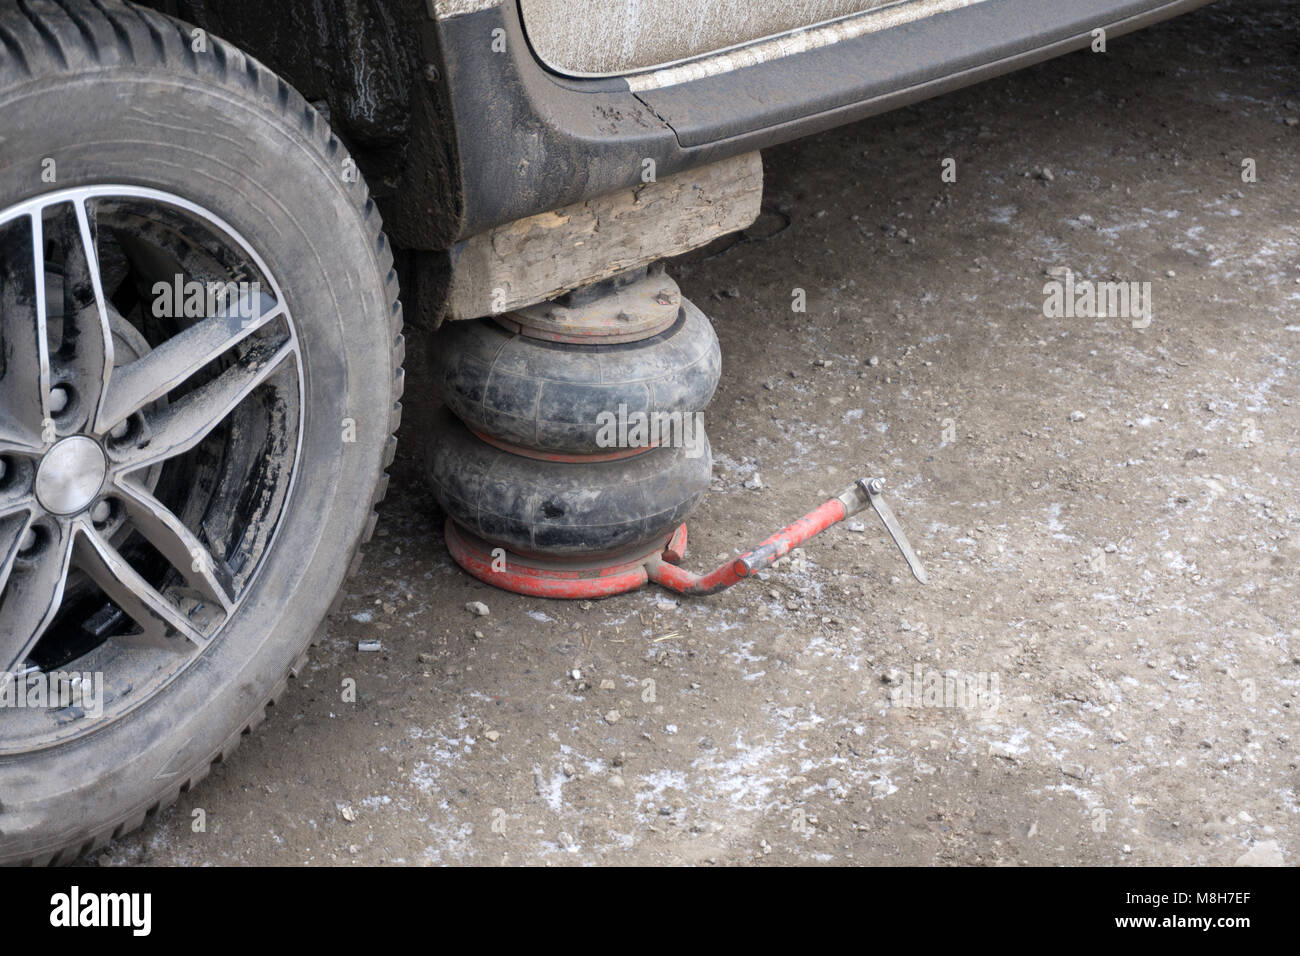 automotive hydraulic Jack under the car to change the wheel Stock Photo